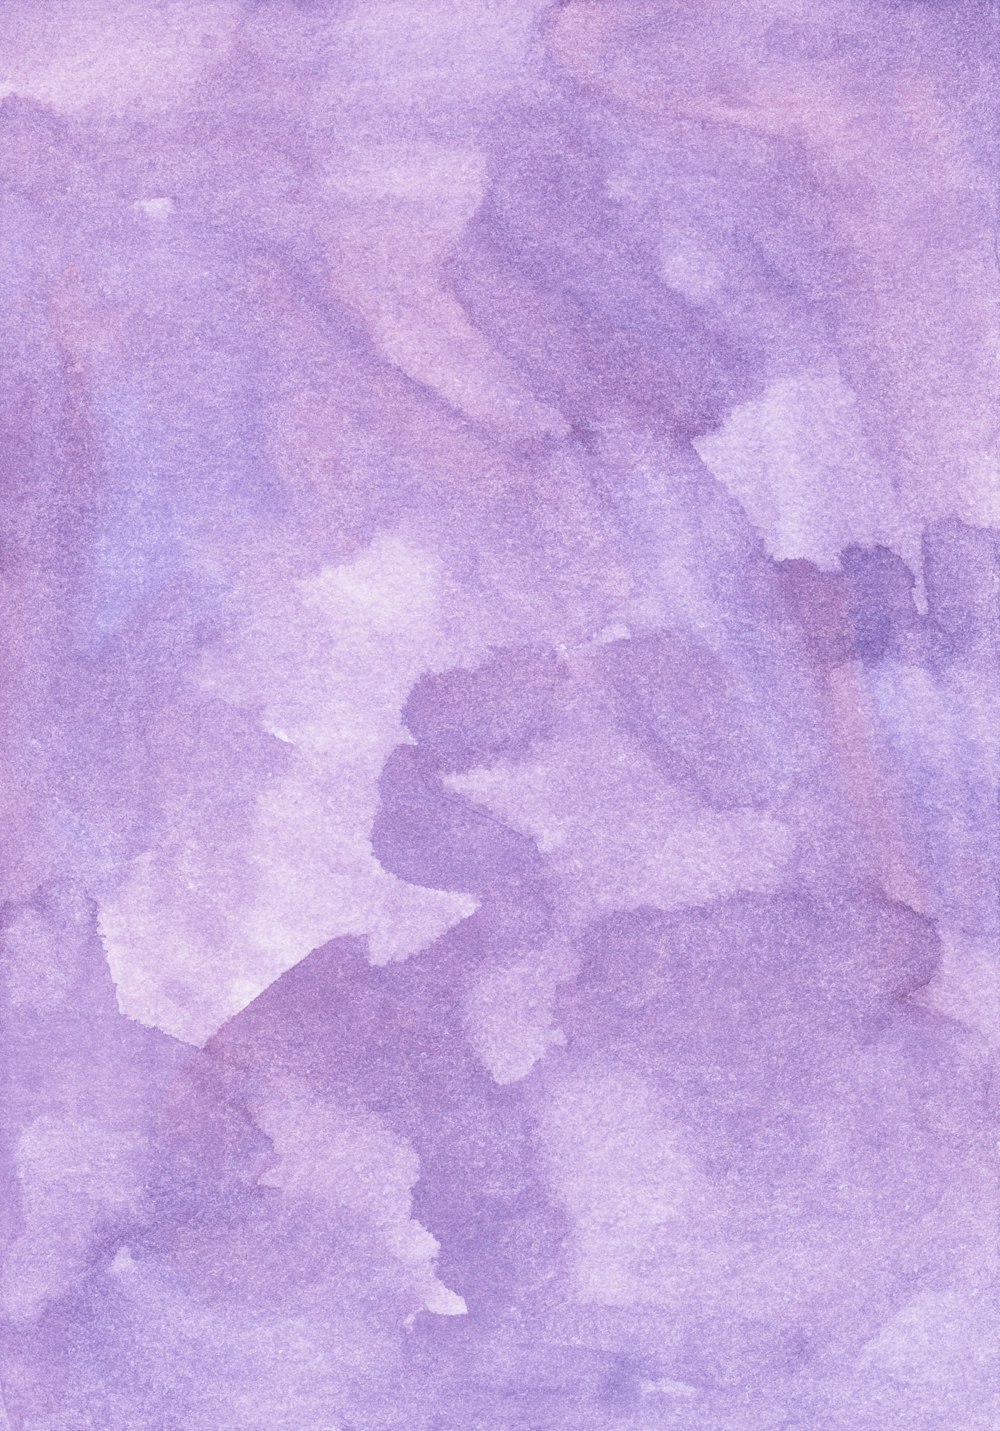 1920x1080 Light Pastel Purple Solid Color Background